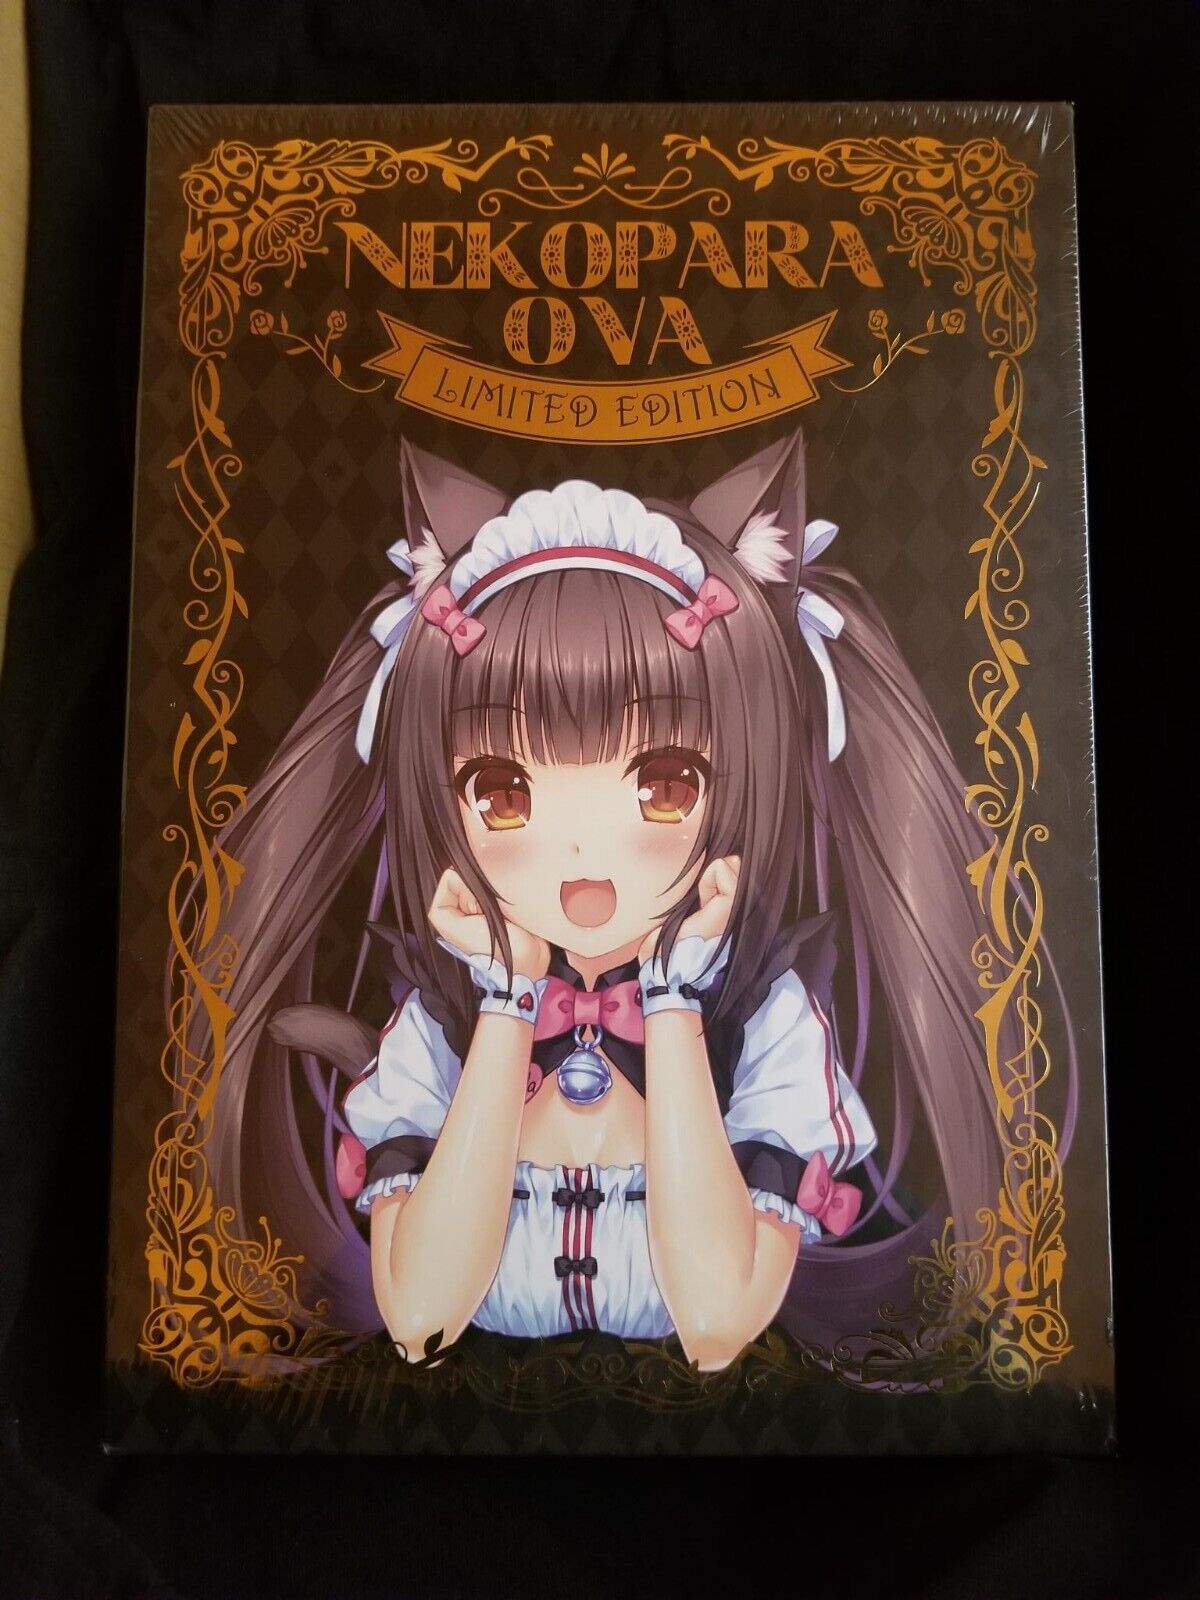 Nekopara OVA Limited Edition Box Set  - Brand new, Still wrapped